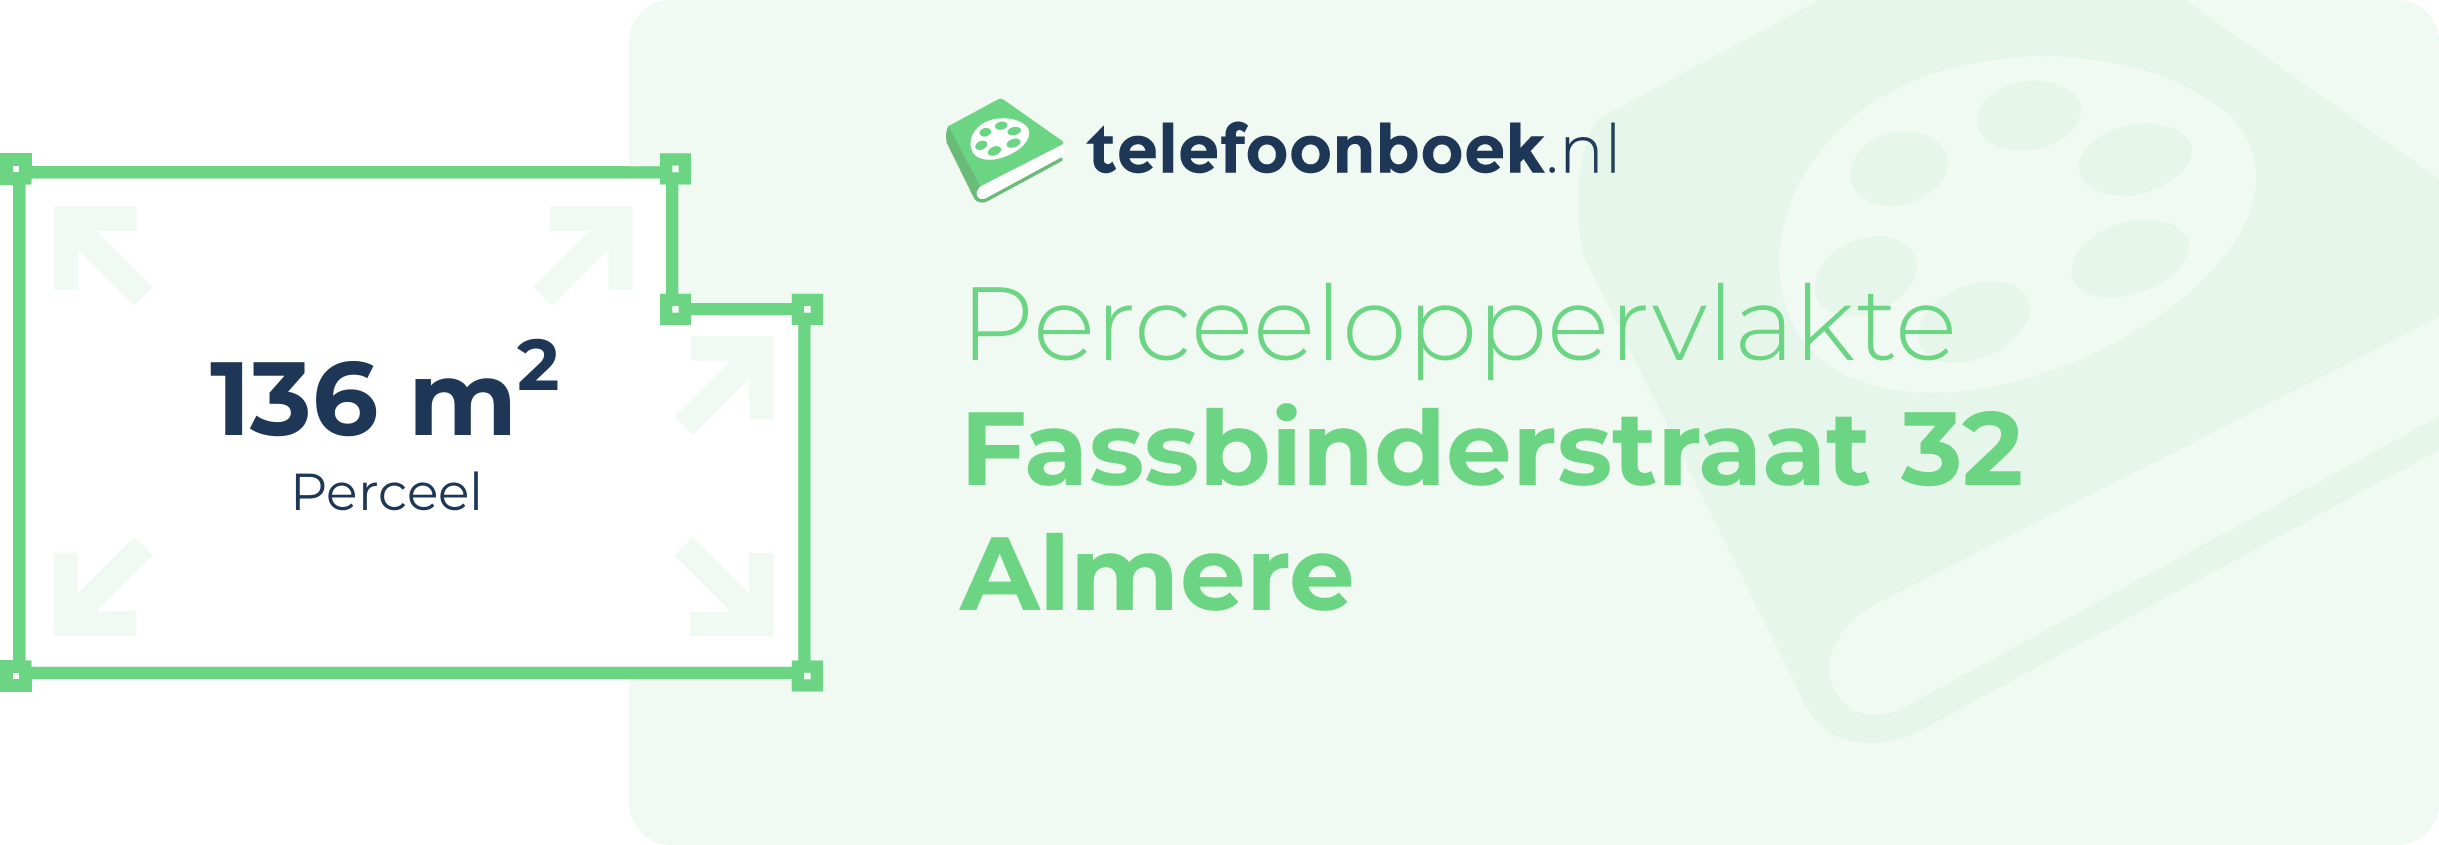 Perceeloppervlakte Fassbinderstraat 32 Almere